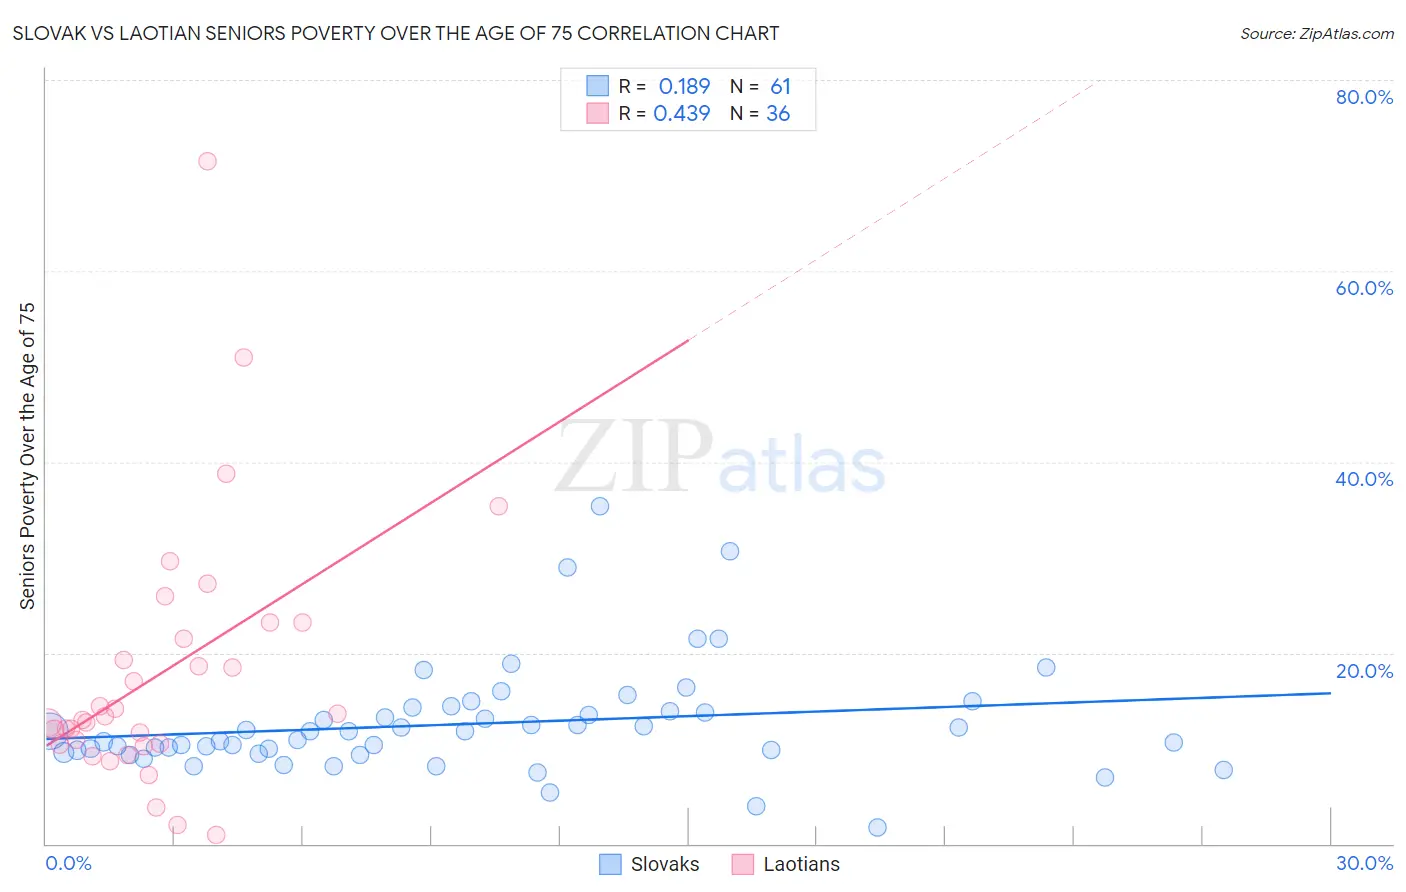 Slovak vs Laotian Seniors Poverty Over the Age of 75